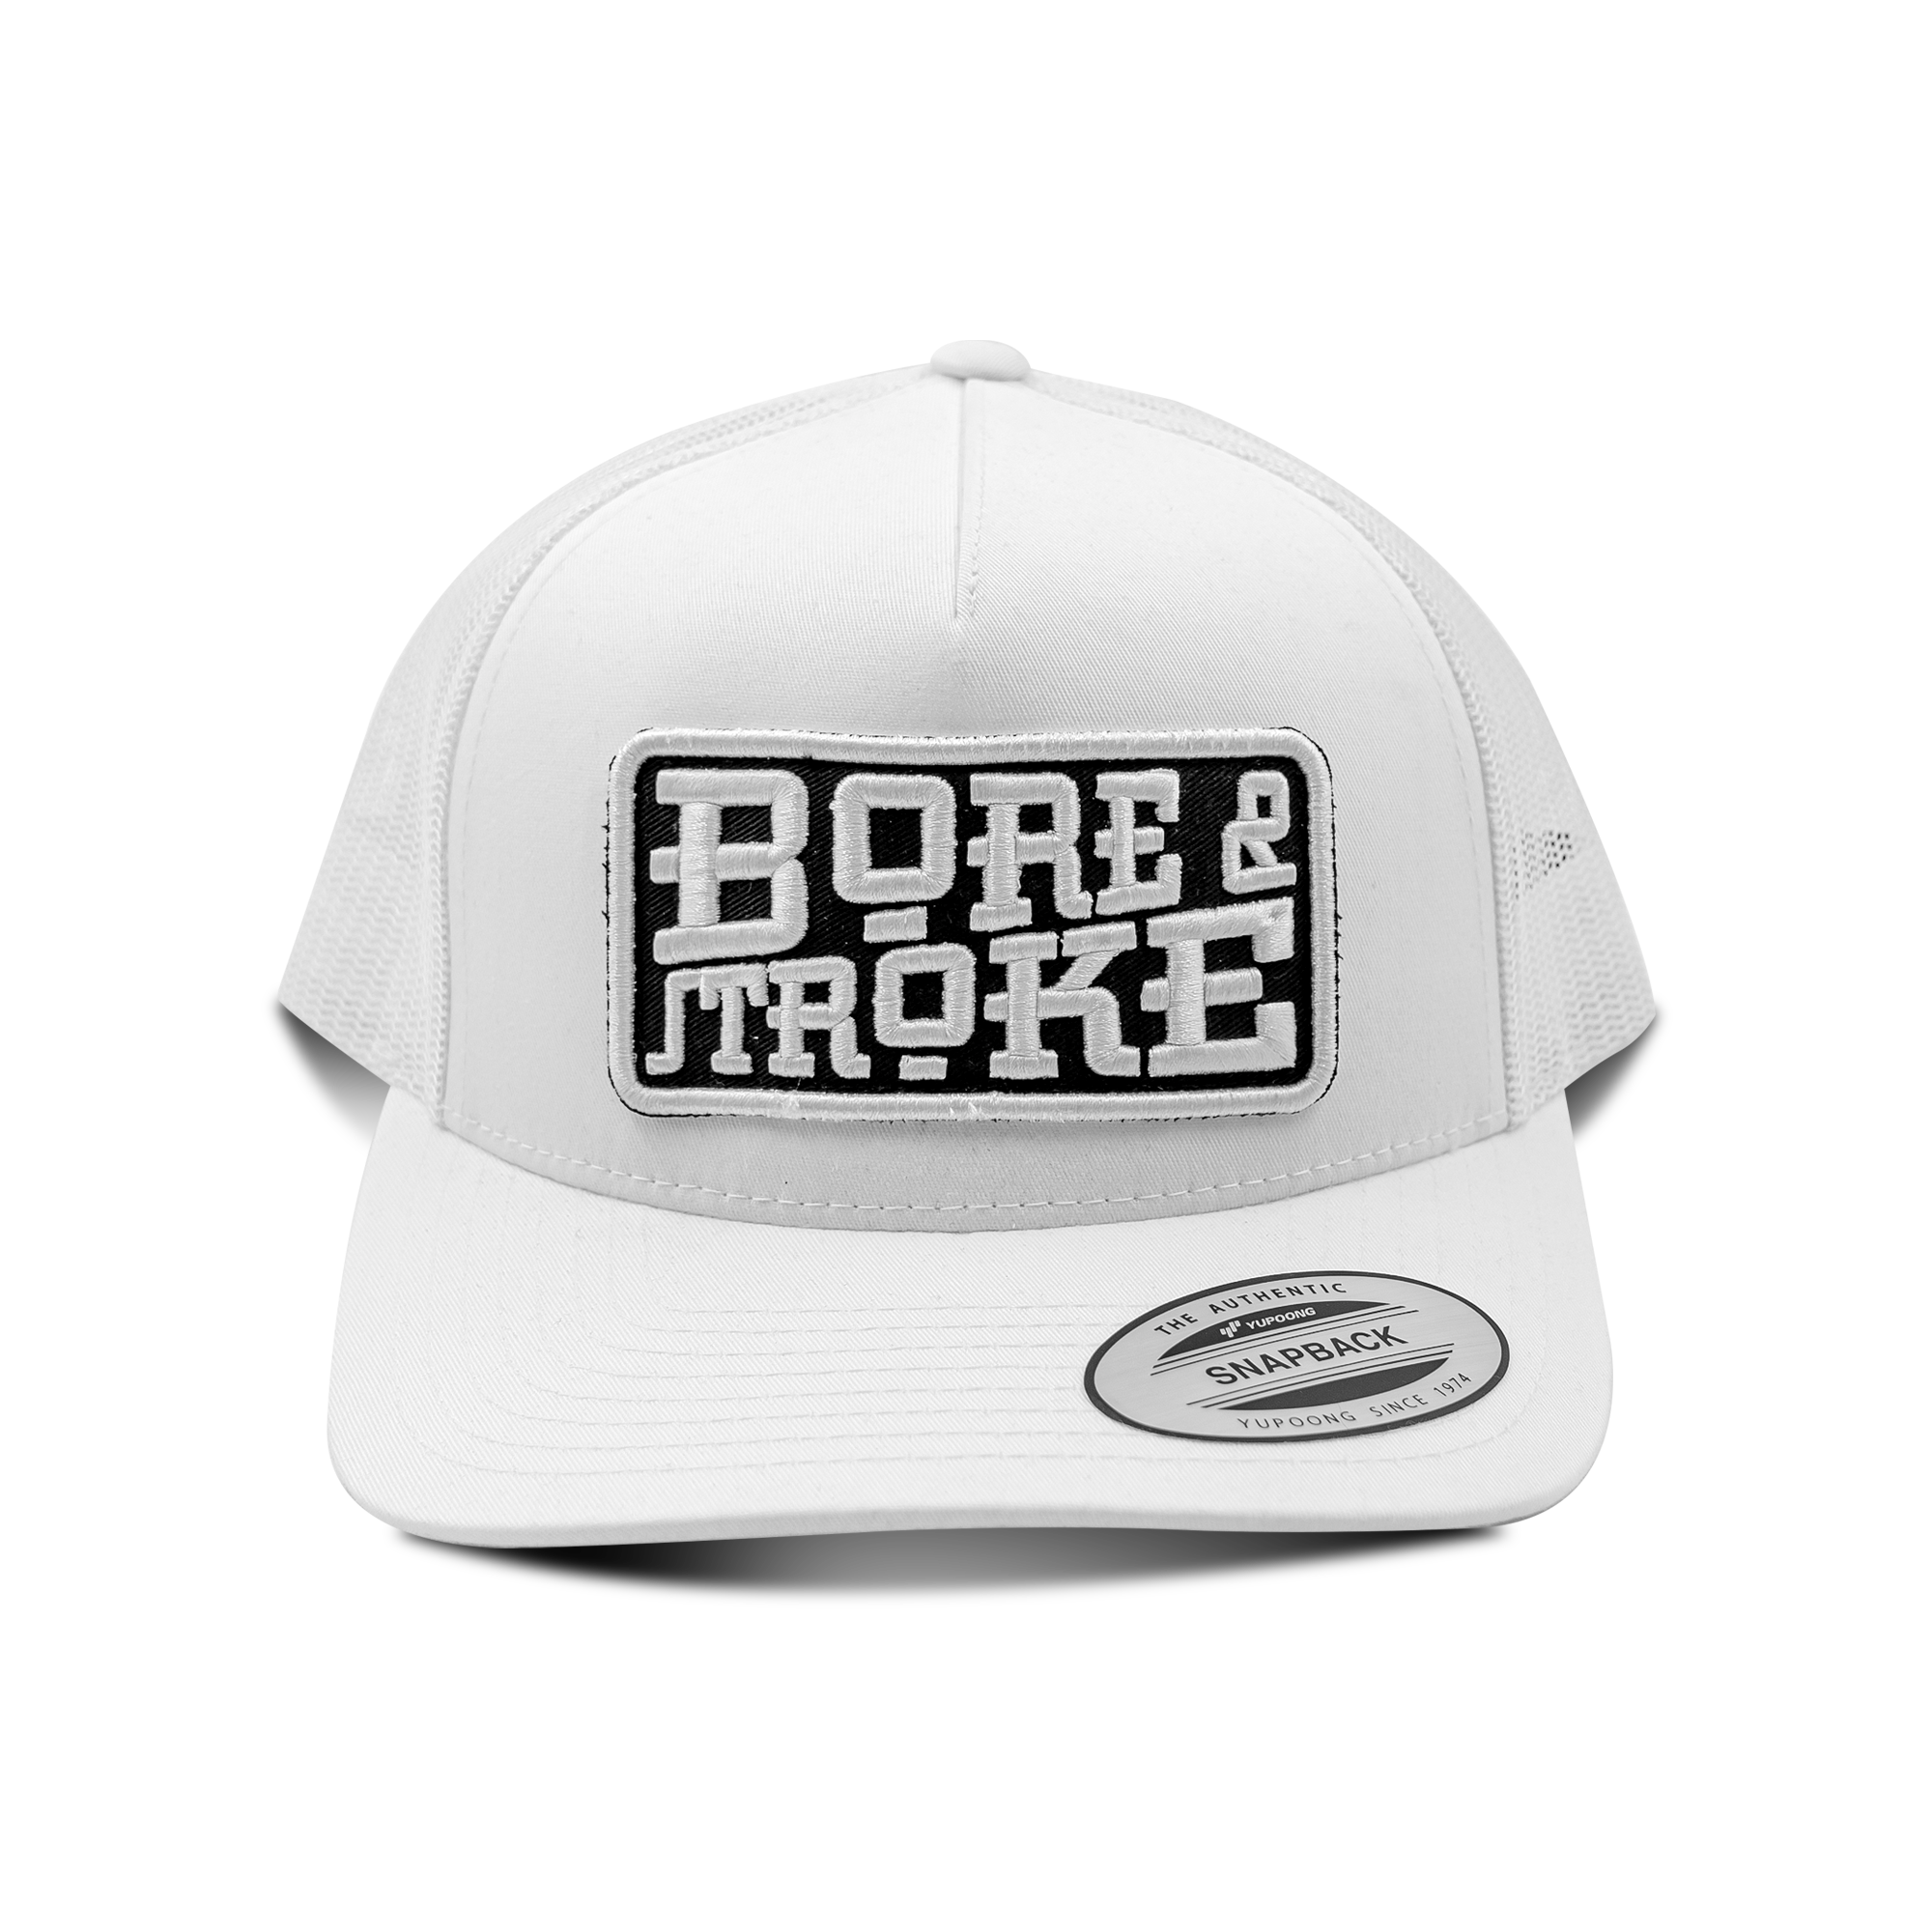 Bore & Stroke Trucker Caps - White